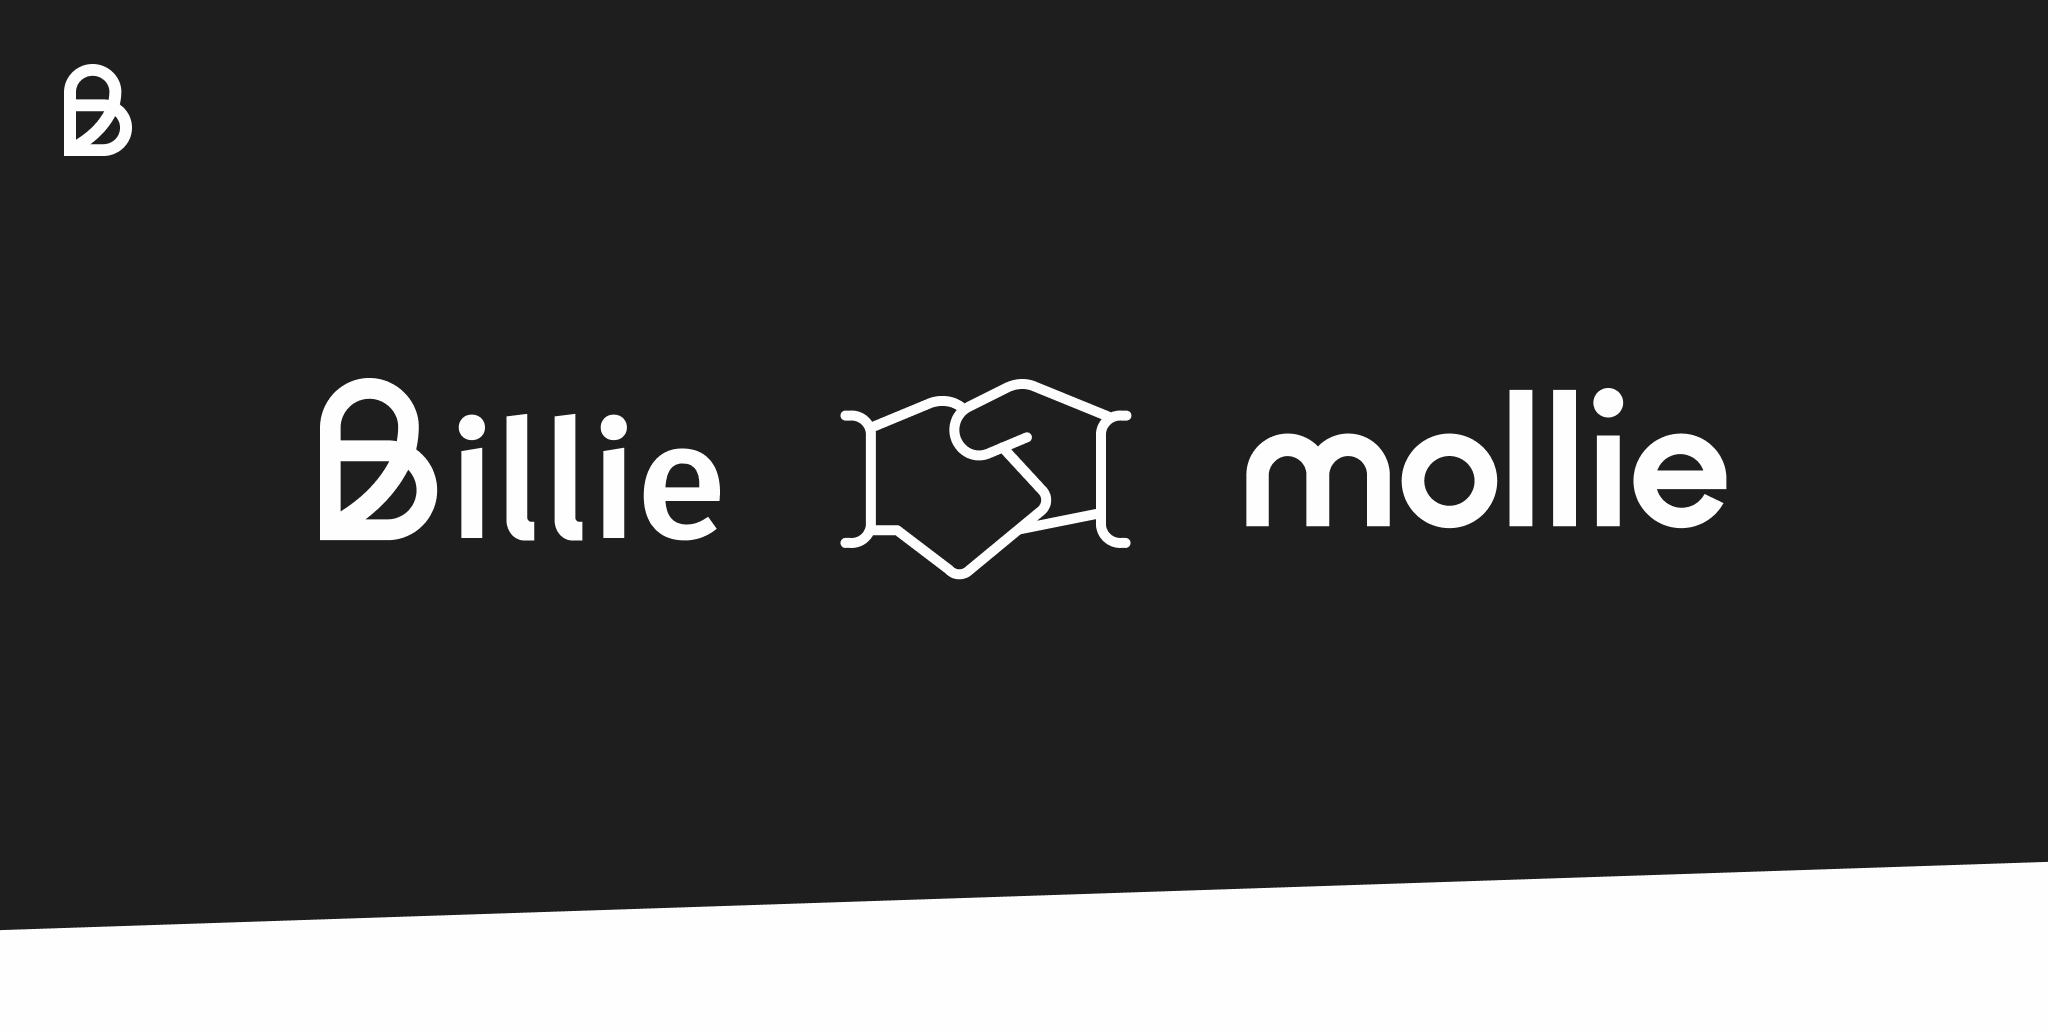 Mollie and Billie Launch Pan-European Partnership